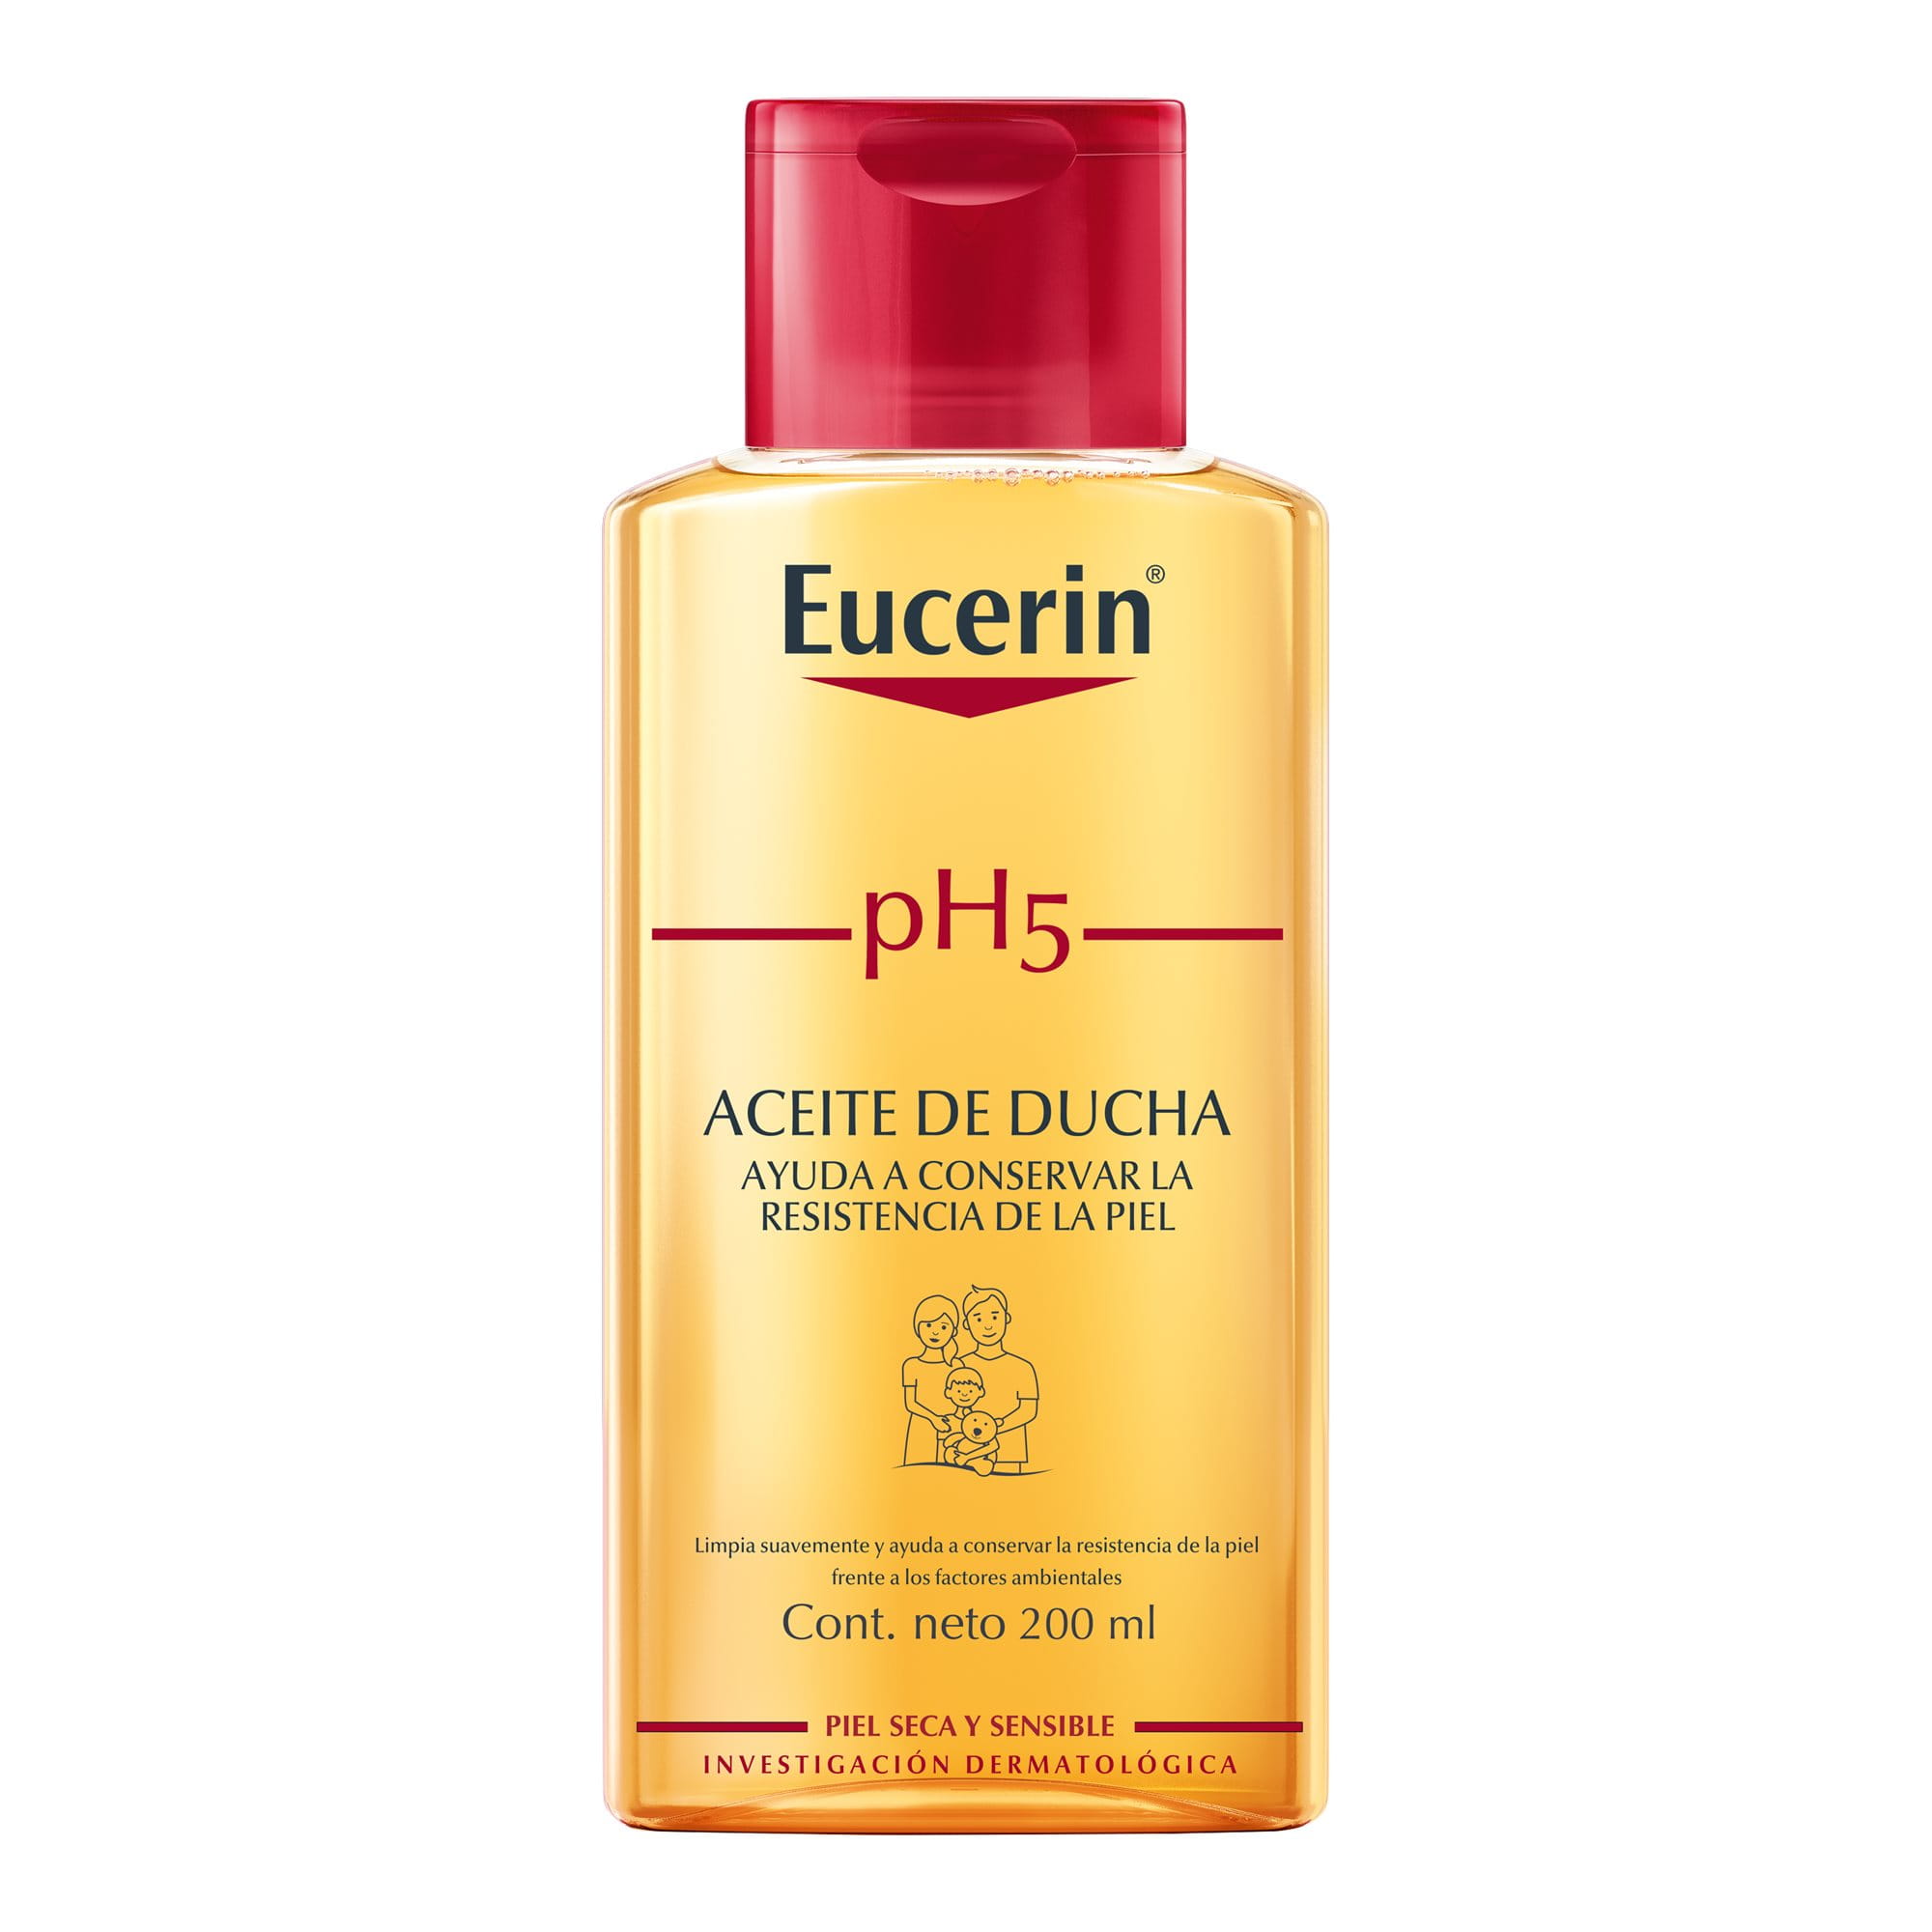 63121_Eucerin-PH5-aceite-de-ducha-200ml_packshot